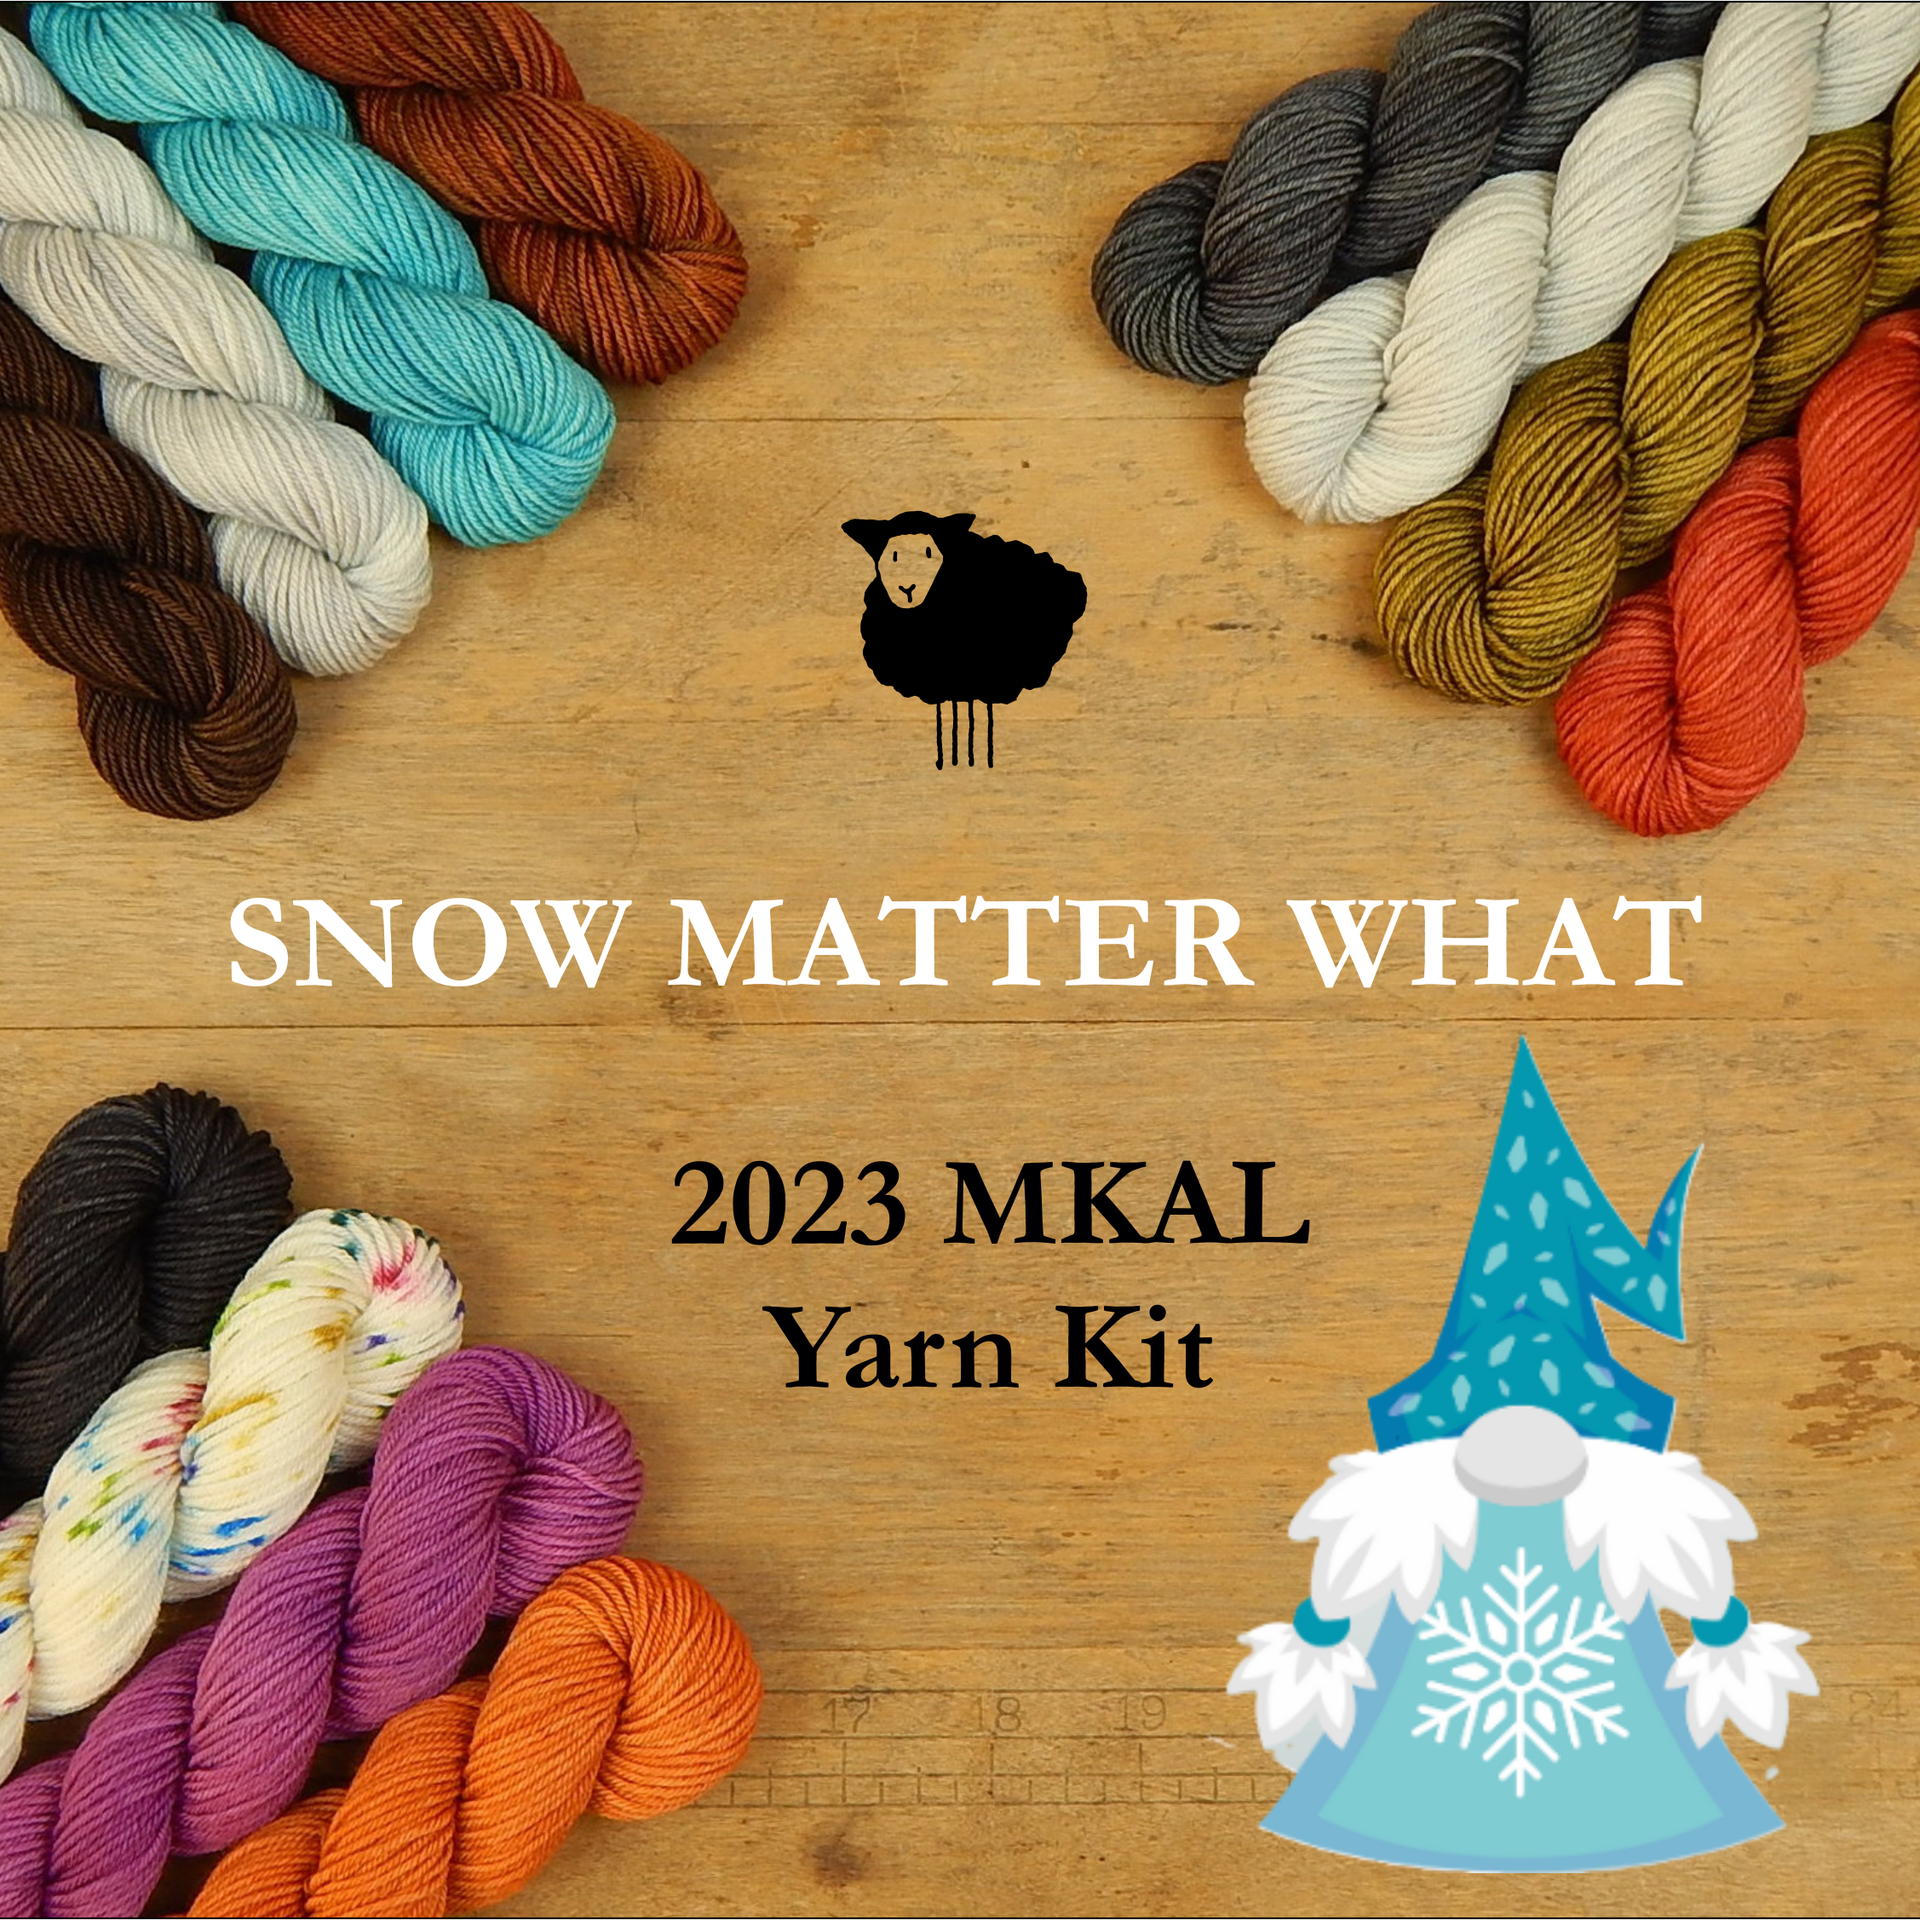 Mini Skein Kit for Snow Matter What Gnome MKAL - Hand Dyed Yarn, Fingering Sock Weight 4 Ply Superwash Merino Wool, Sock Yarn Set